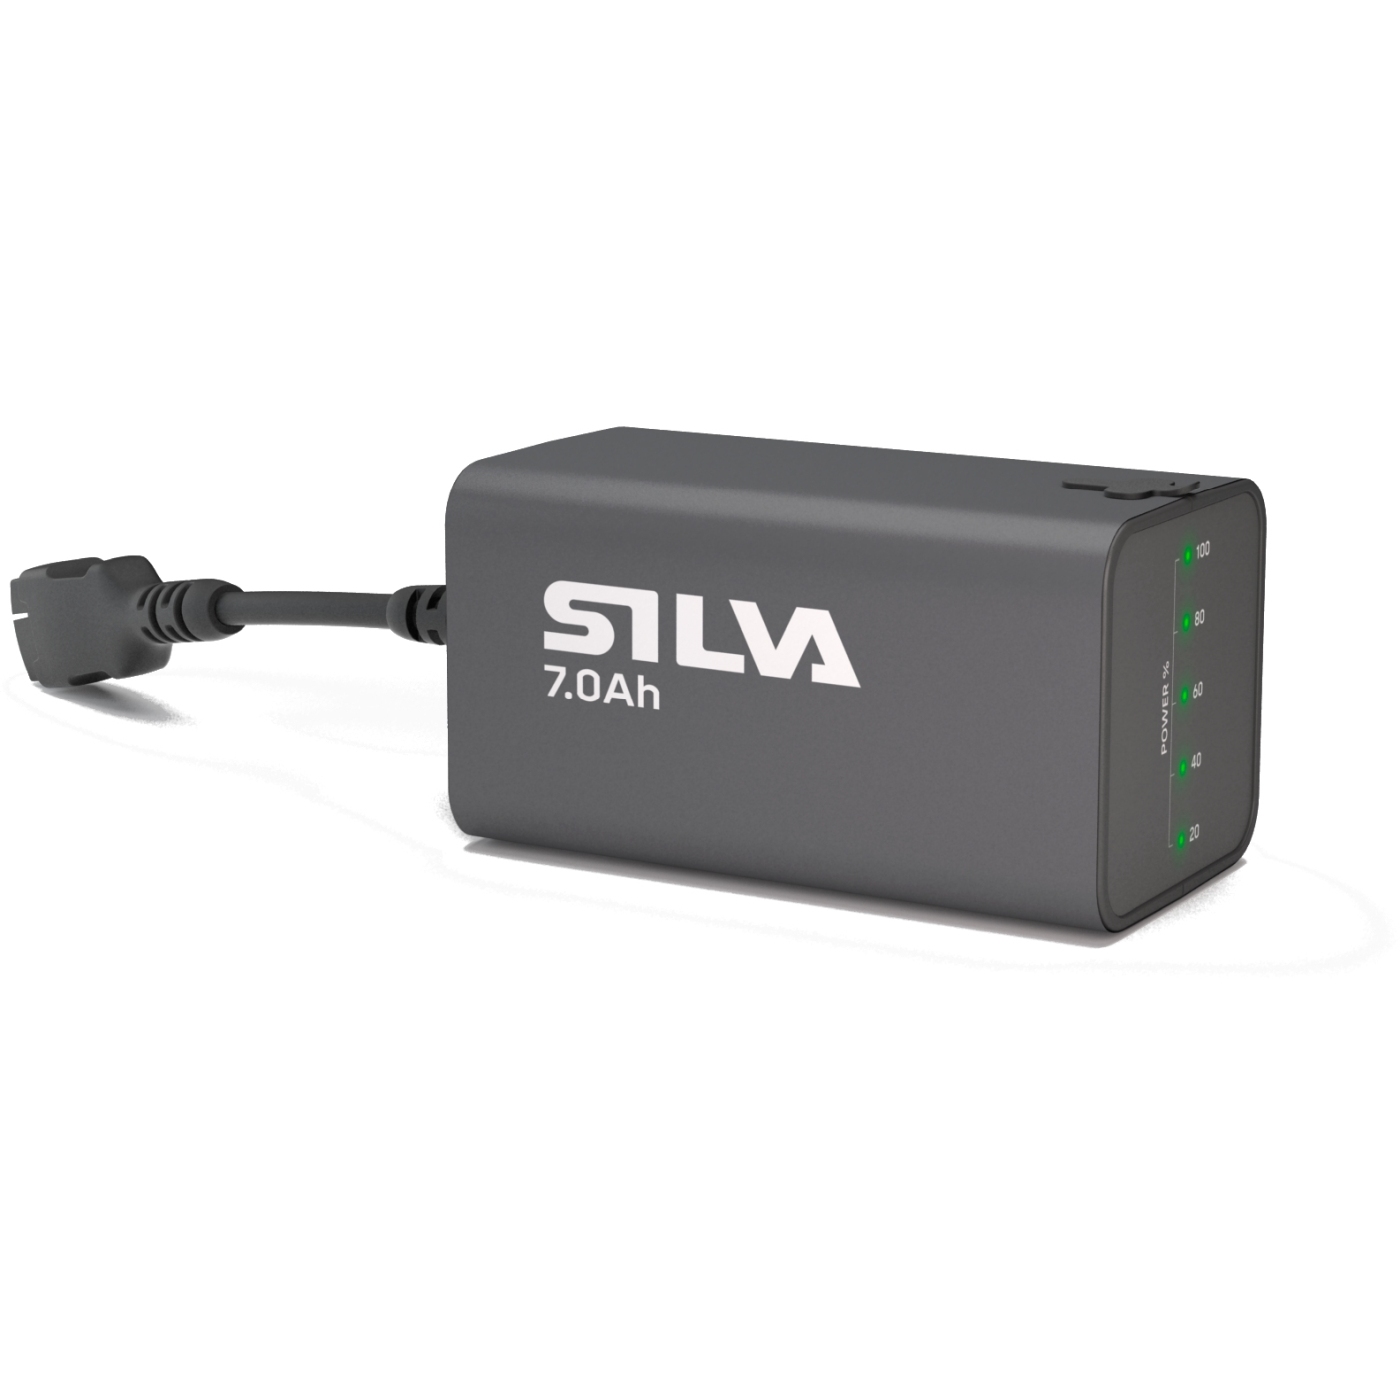 Productfoto van Silva Battery 7.0Ah